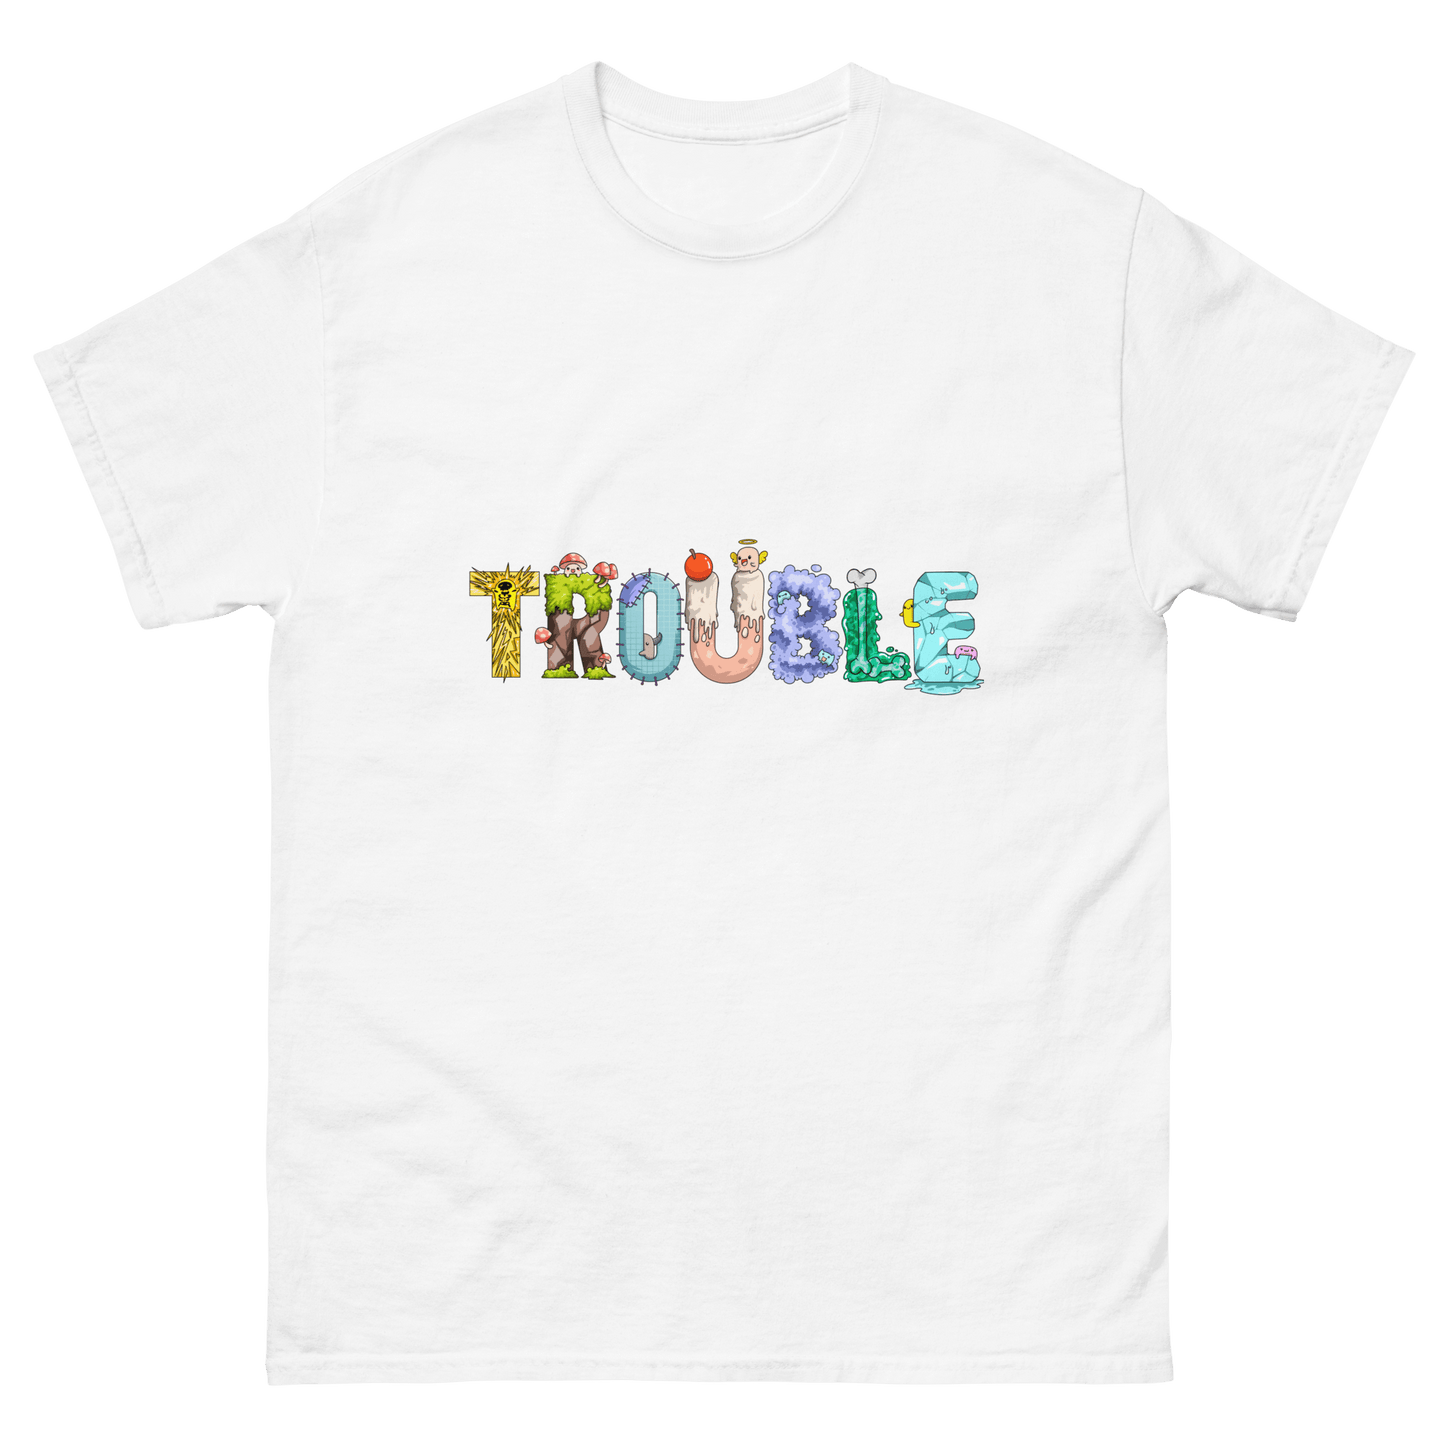 Trouble T-shirt Unisex